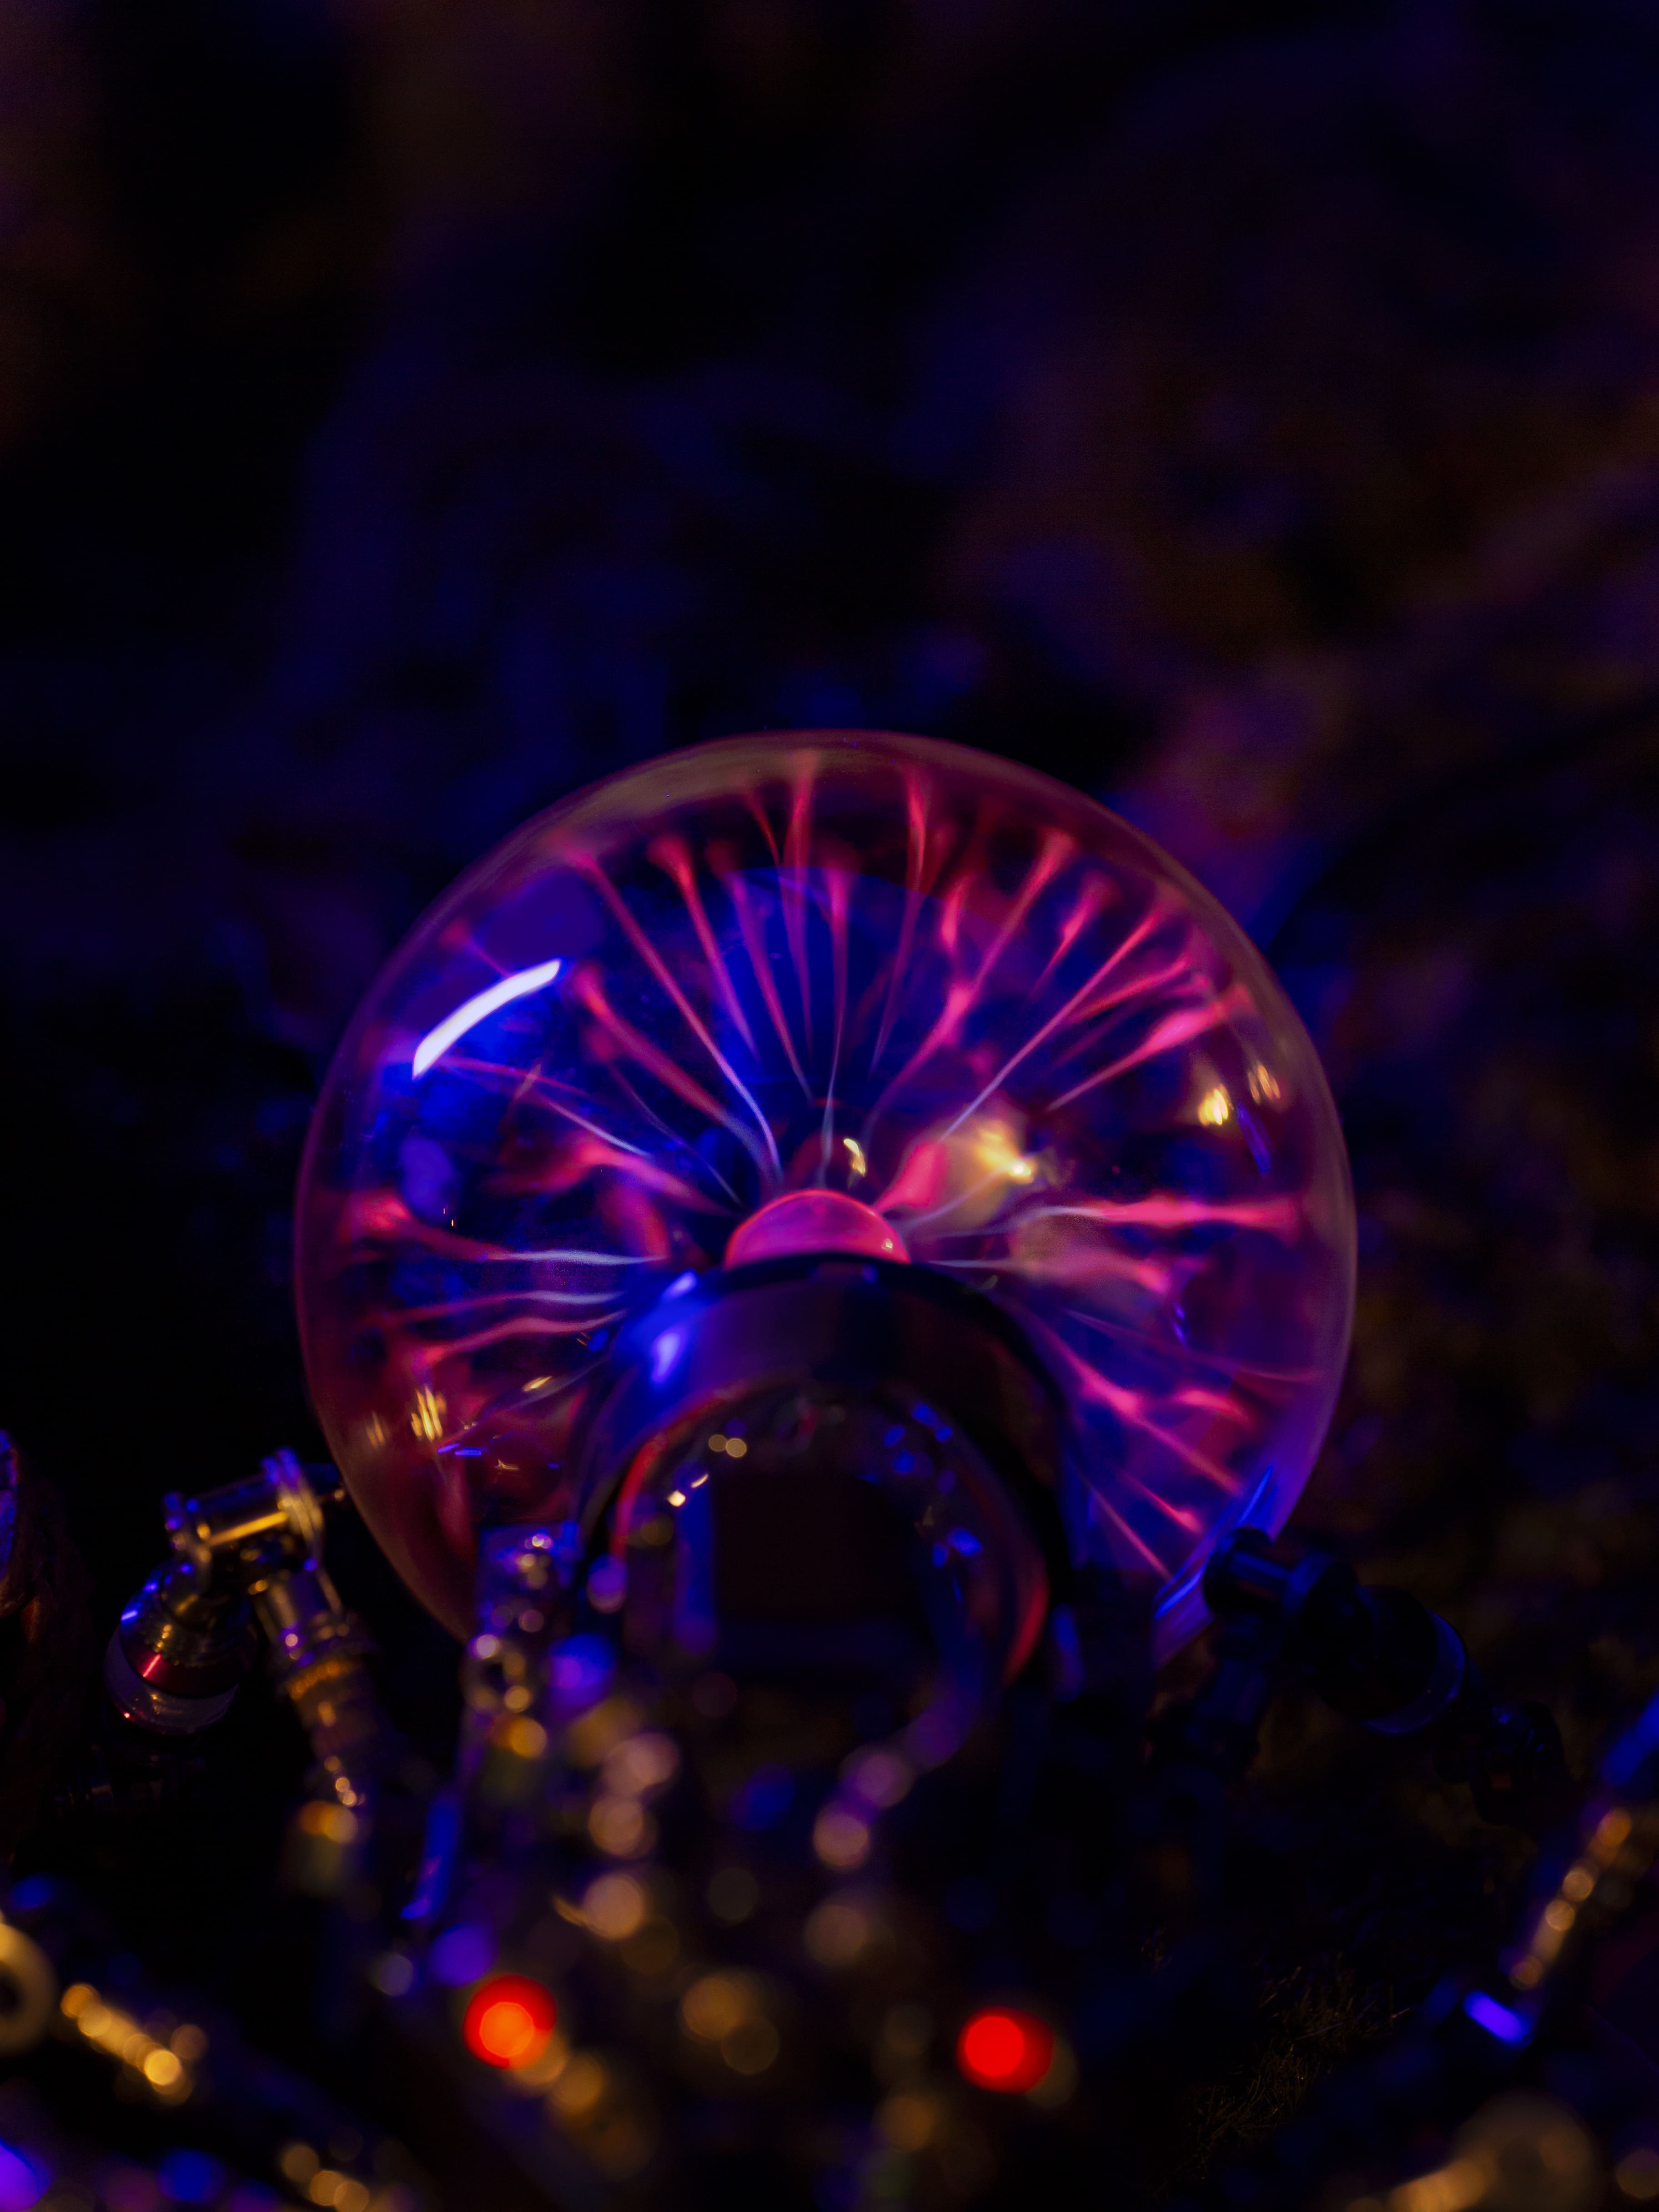 Cyberpunk-Plasmaballspinne